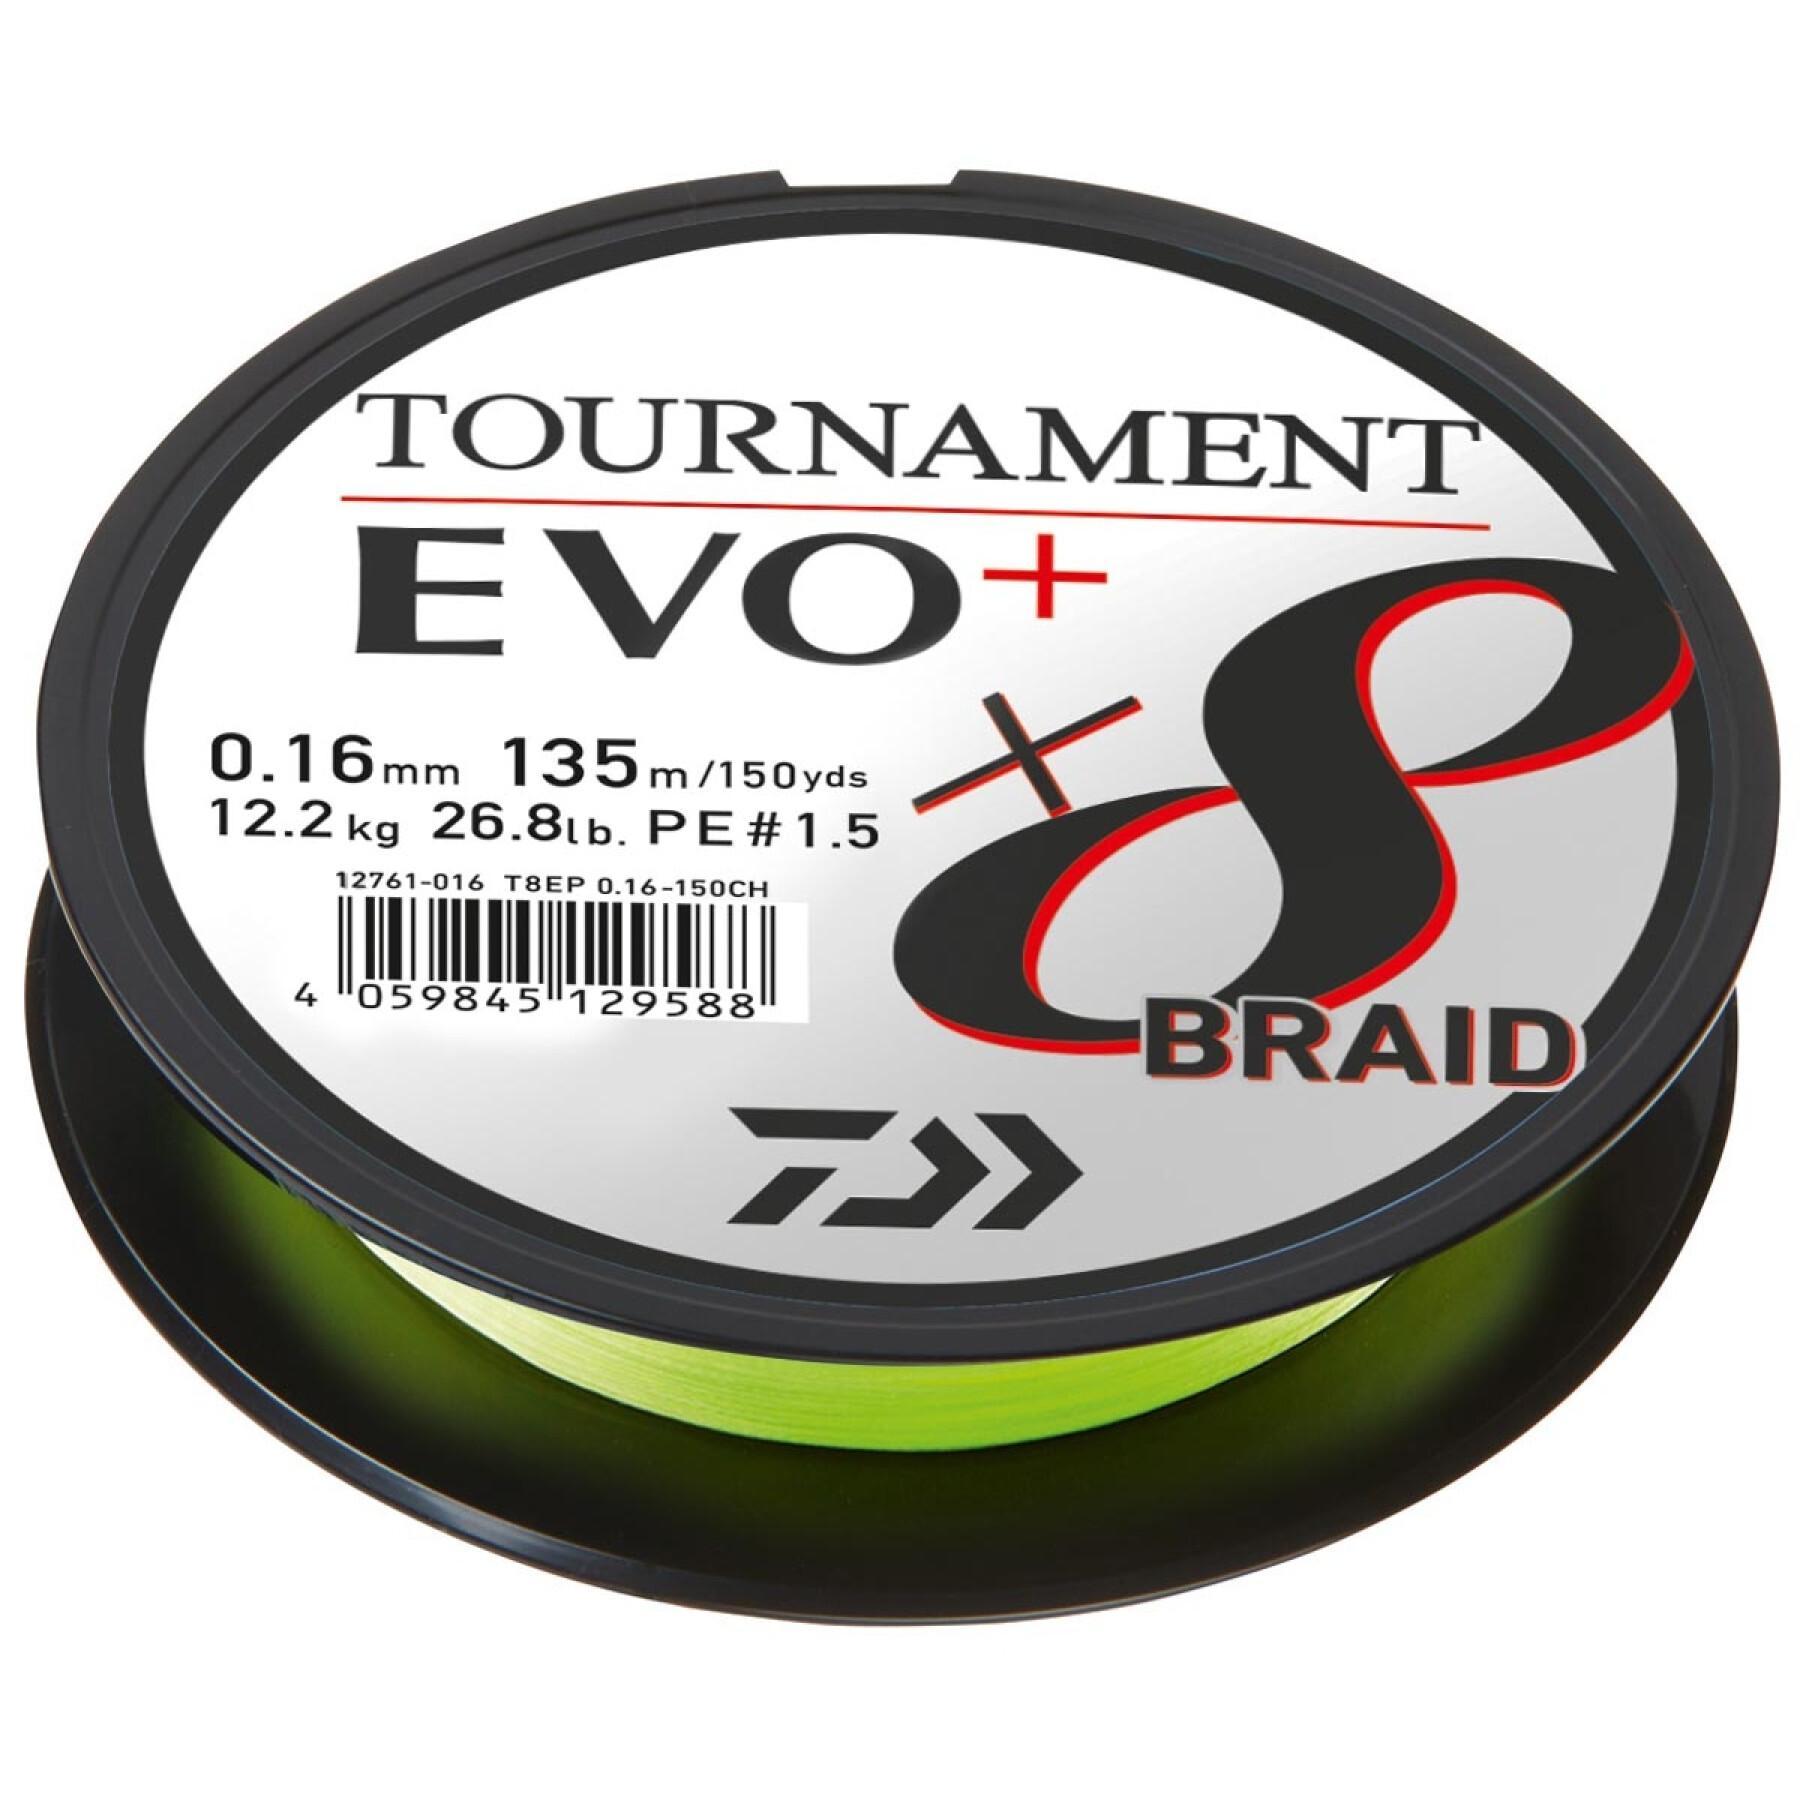 Treccia Daiwa Tournament 8 Braid Evo + chartreuse